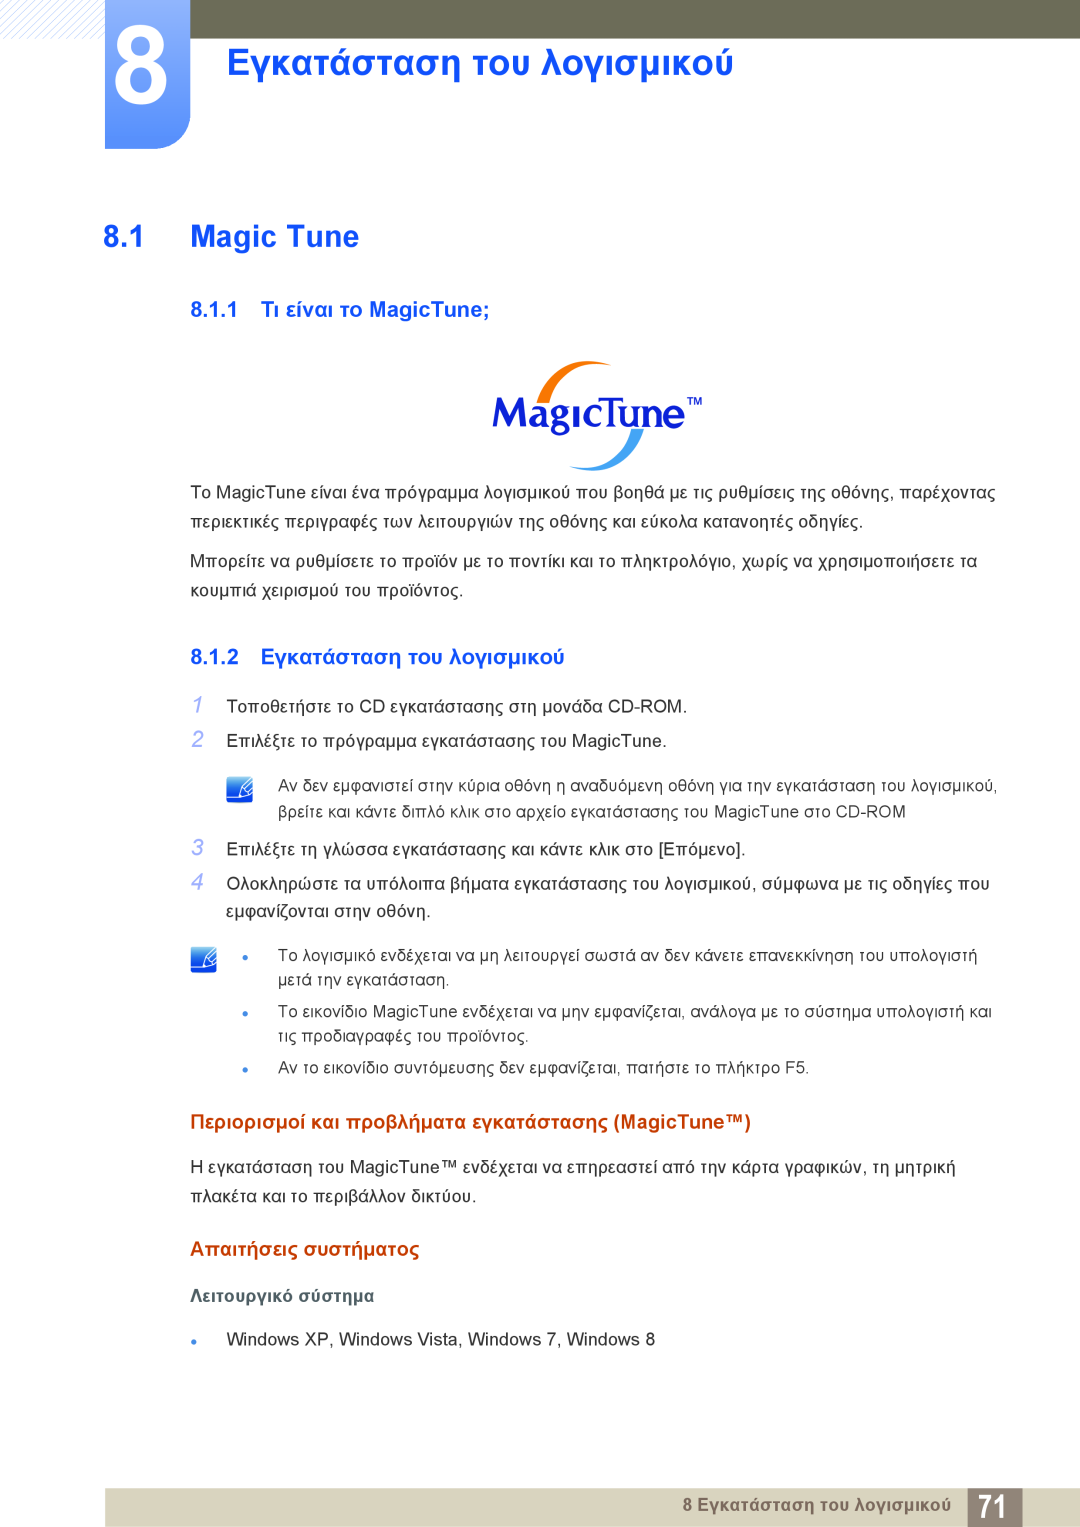 Samsung LS24C45KMW/EN manual 8 Εγκατάσταση του λογισμικού, Magic Tune, 8.1.1 Τι είναι το MagicTune, Απαιτήσεις συστήματος 